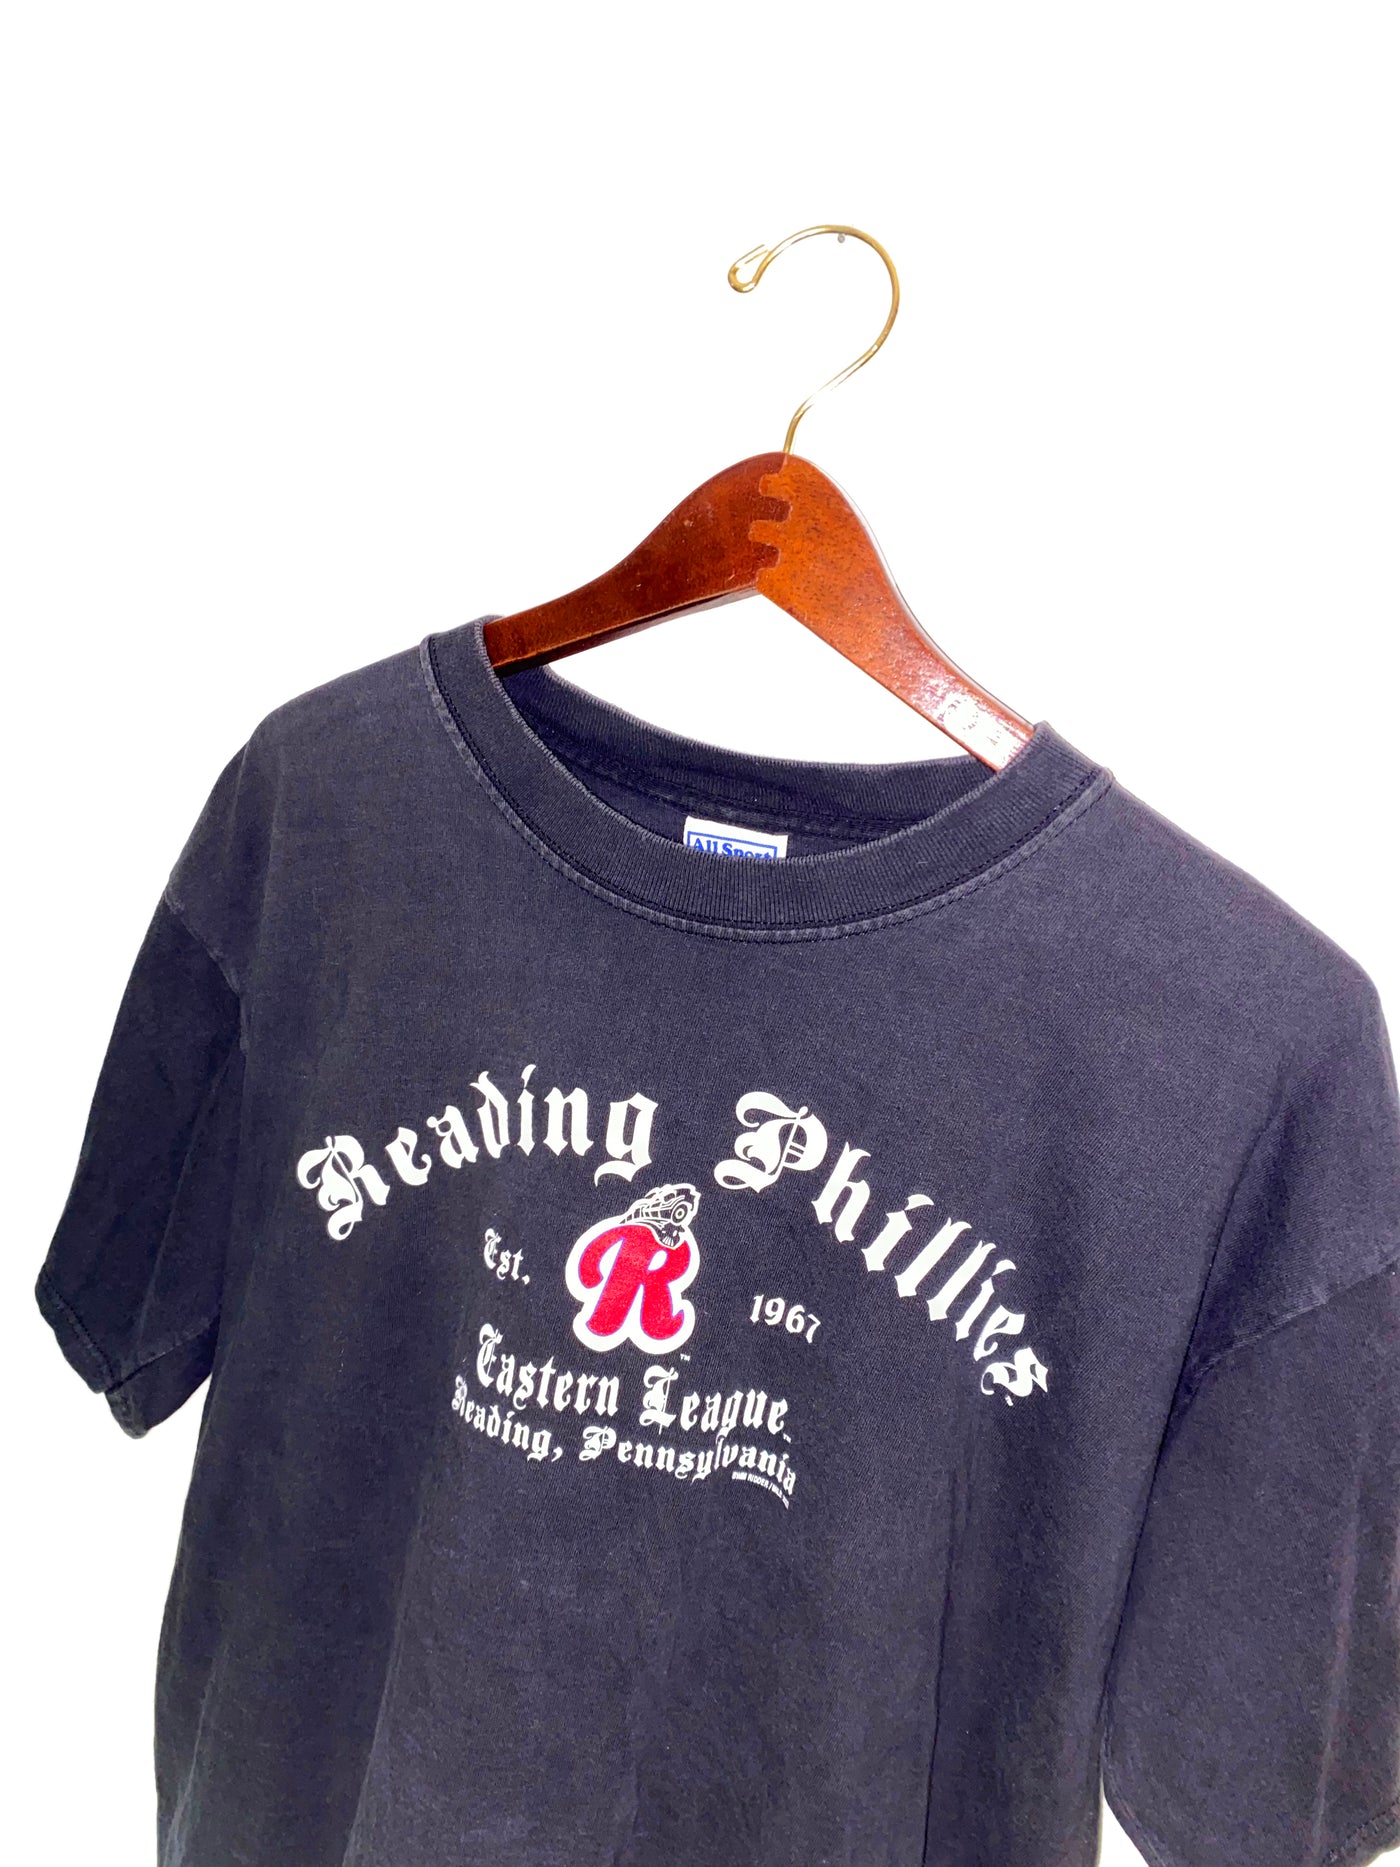 2002 Reading Phillies T-Shirt